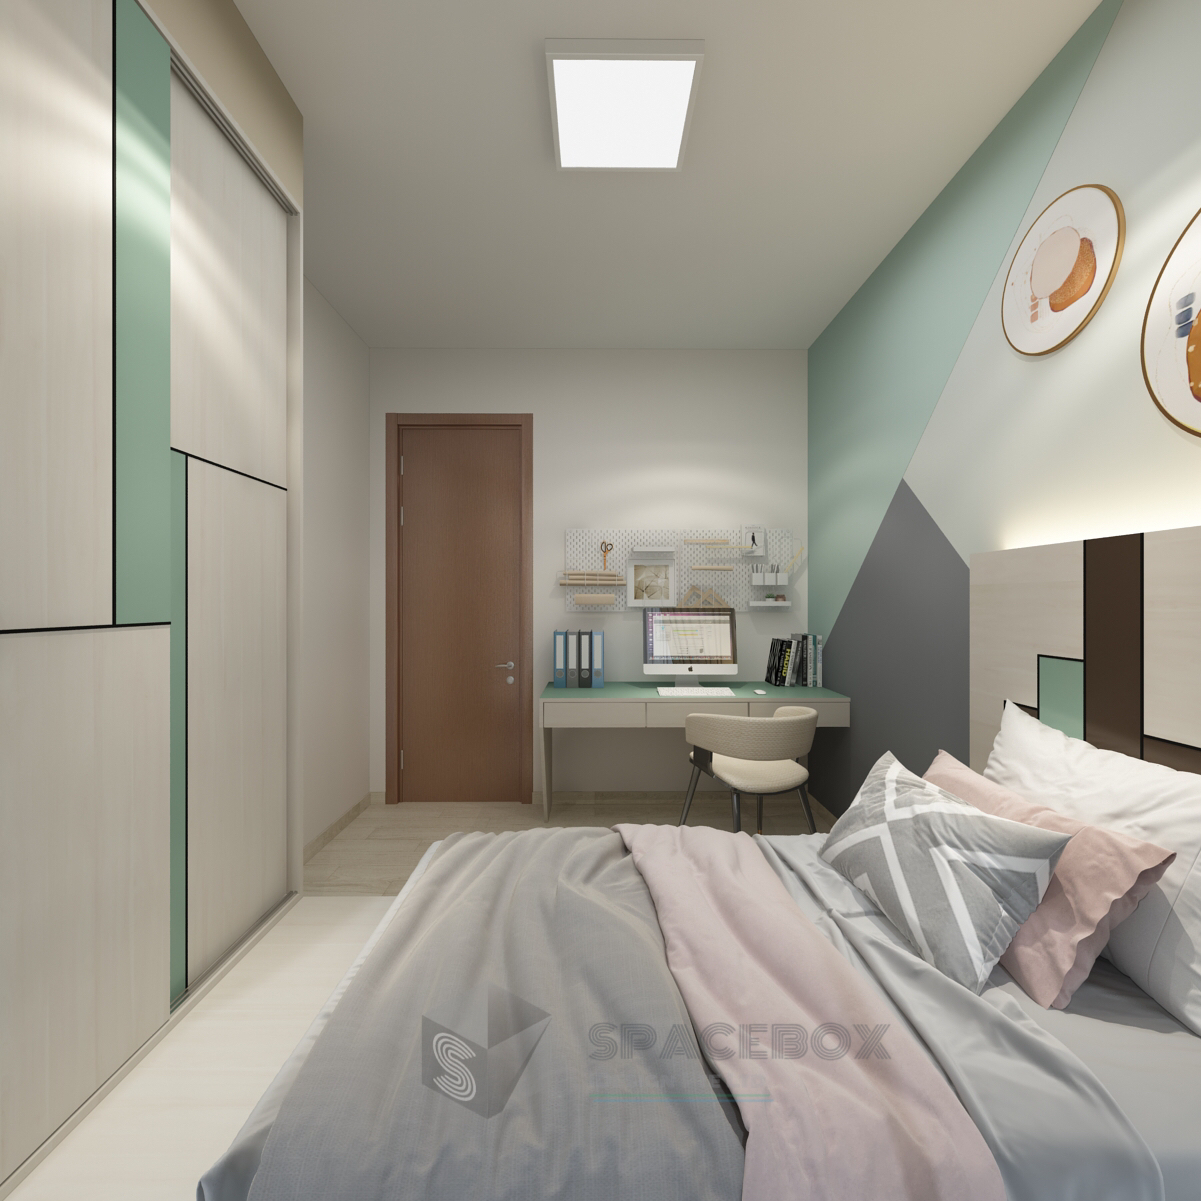 renovation idea modern bedroom study